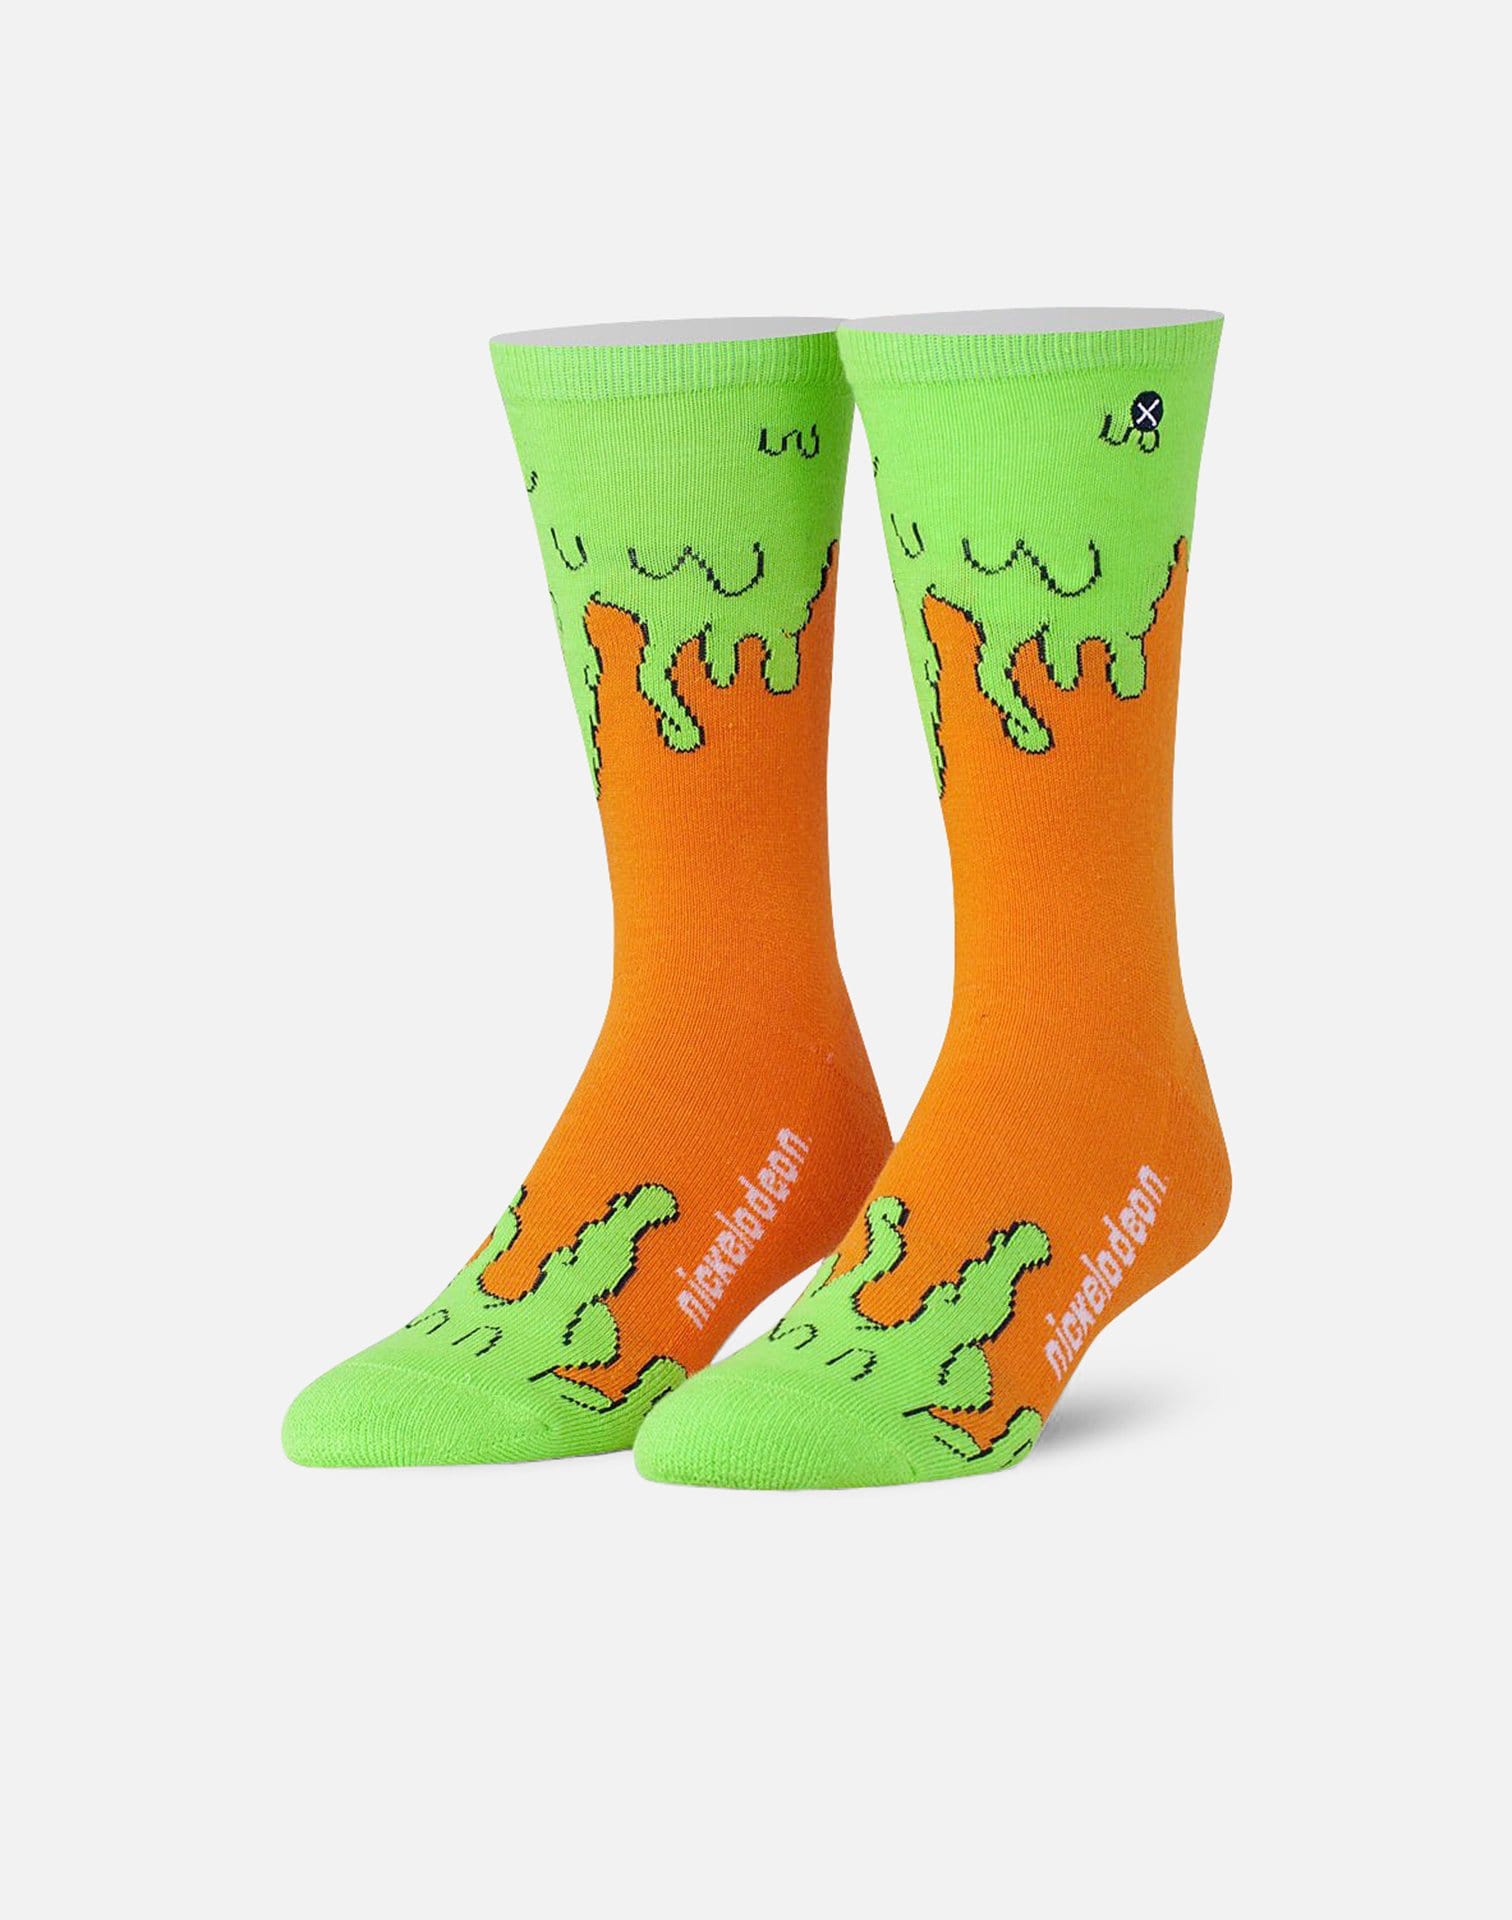 Odd Sox Nickelodeon Slime Crew Socks